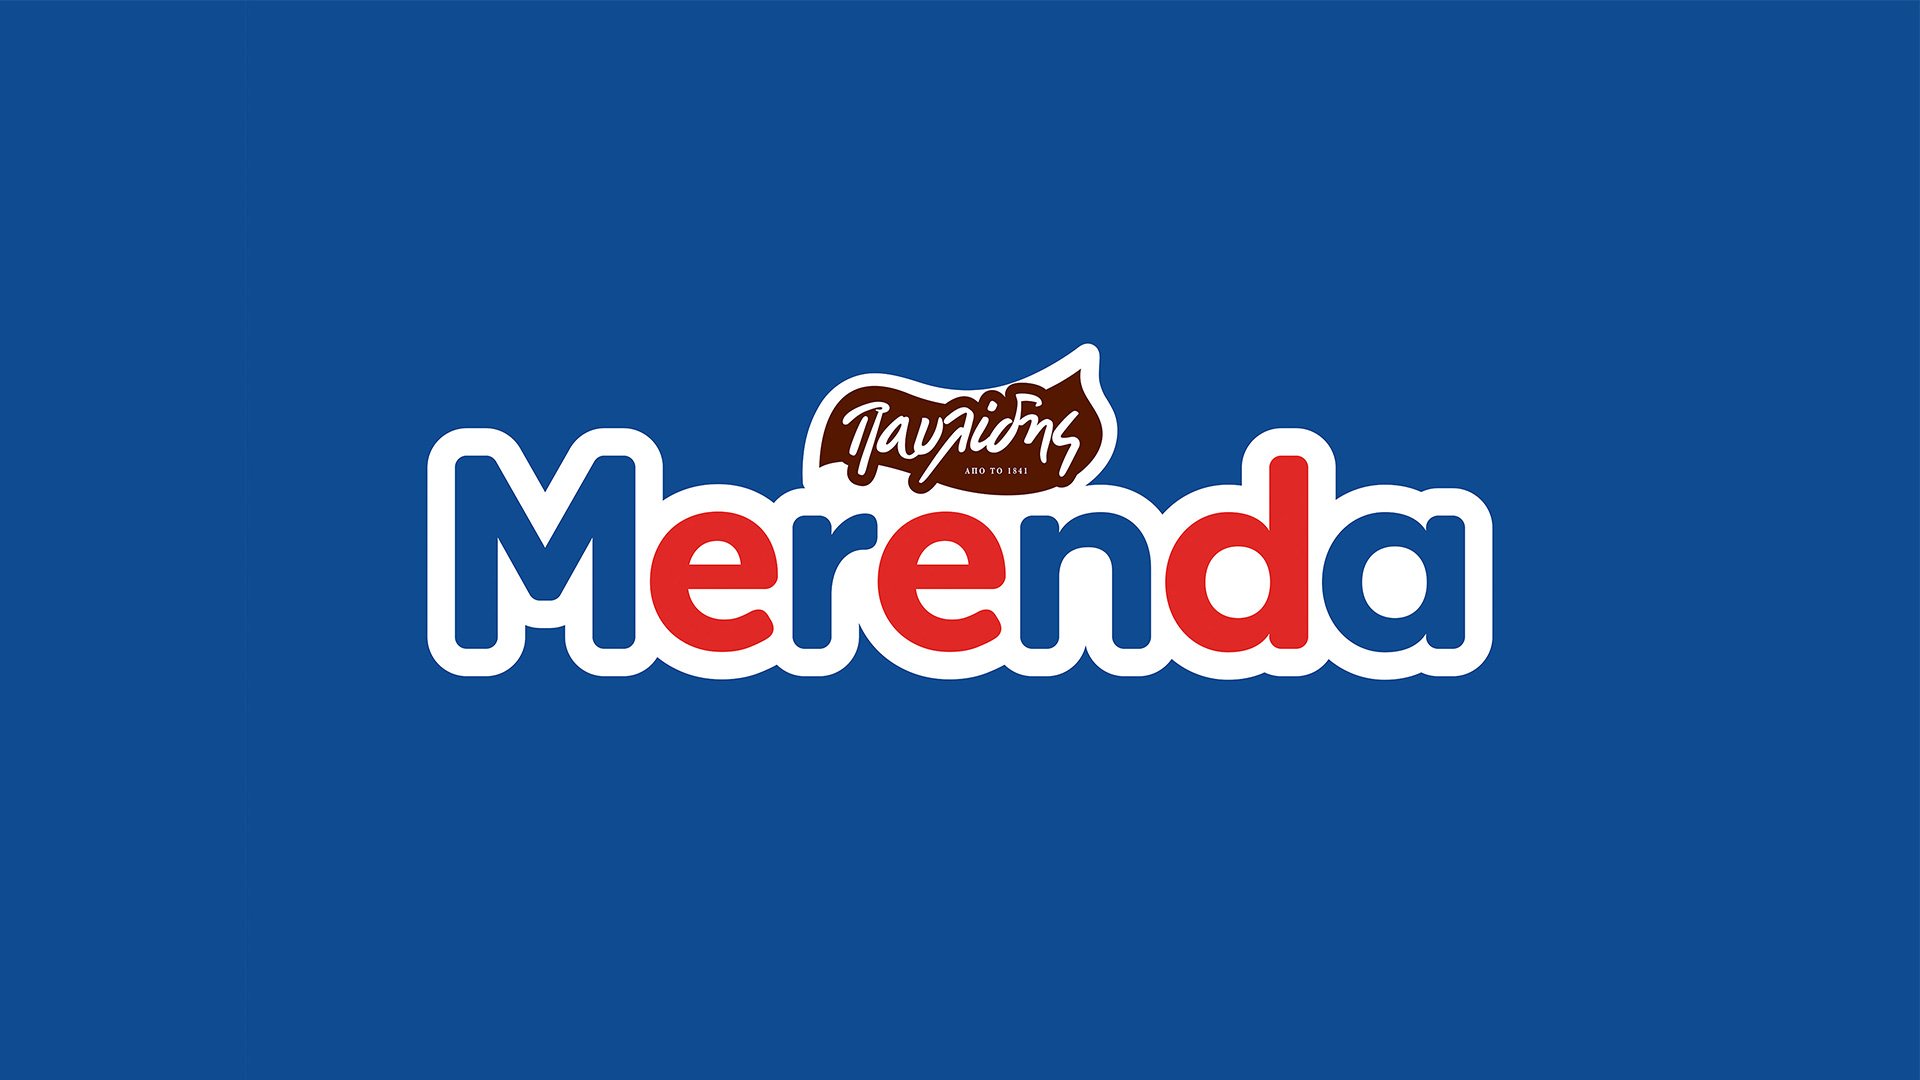 Merenda praline spread logo redesigned